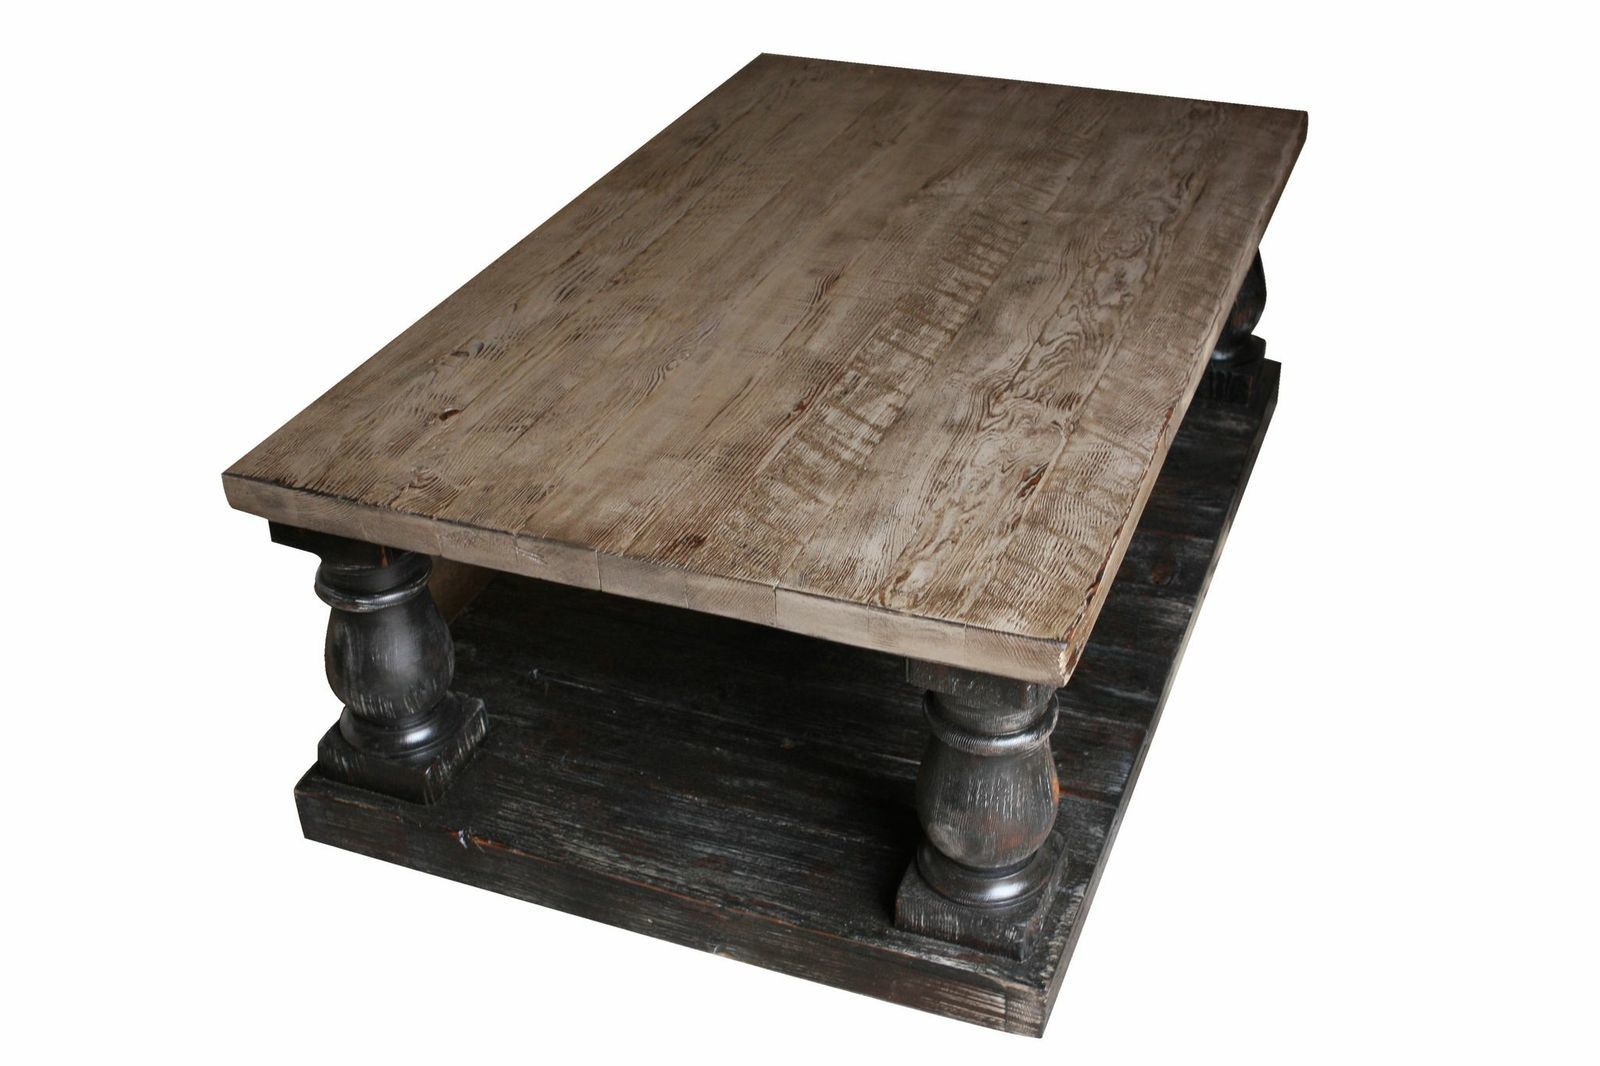 Postobello Coffee Table Built in Reclaimed Wood